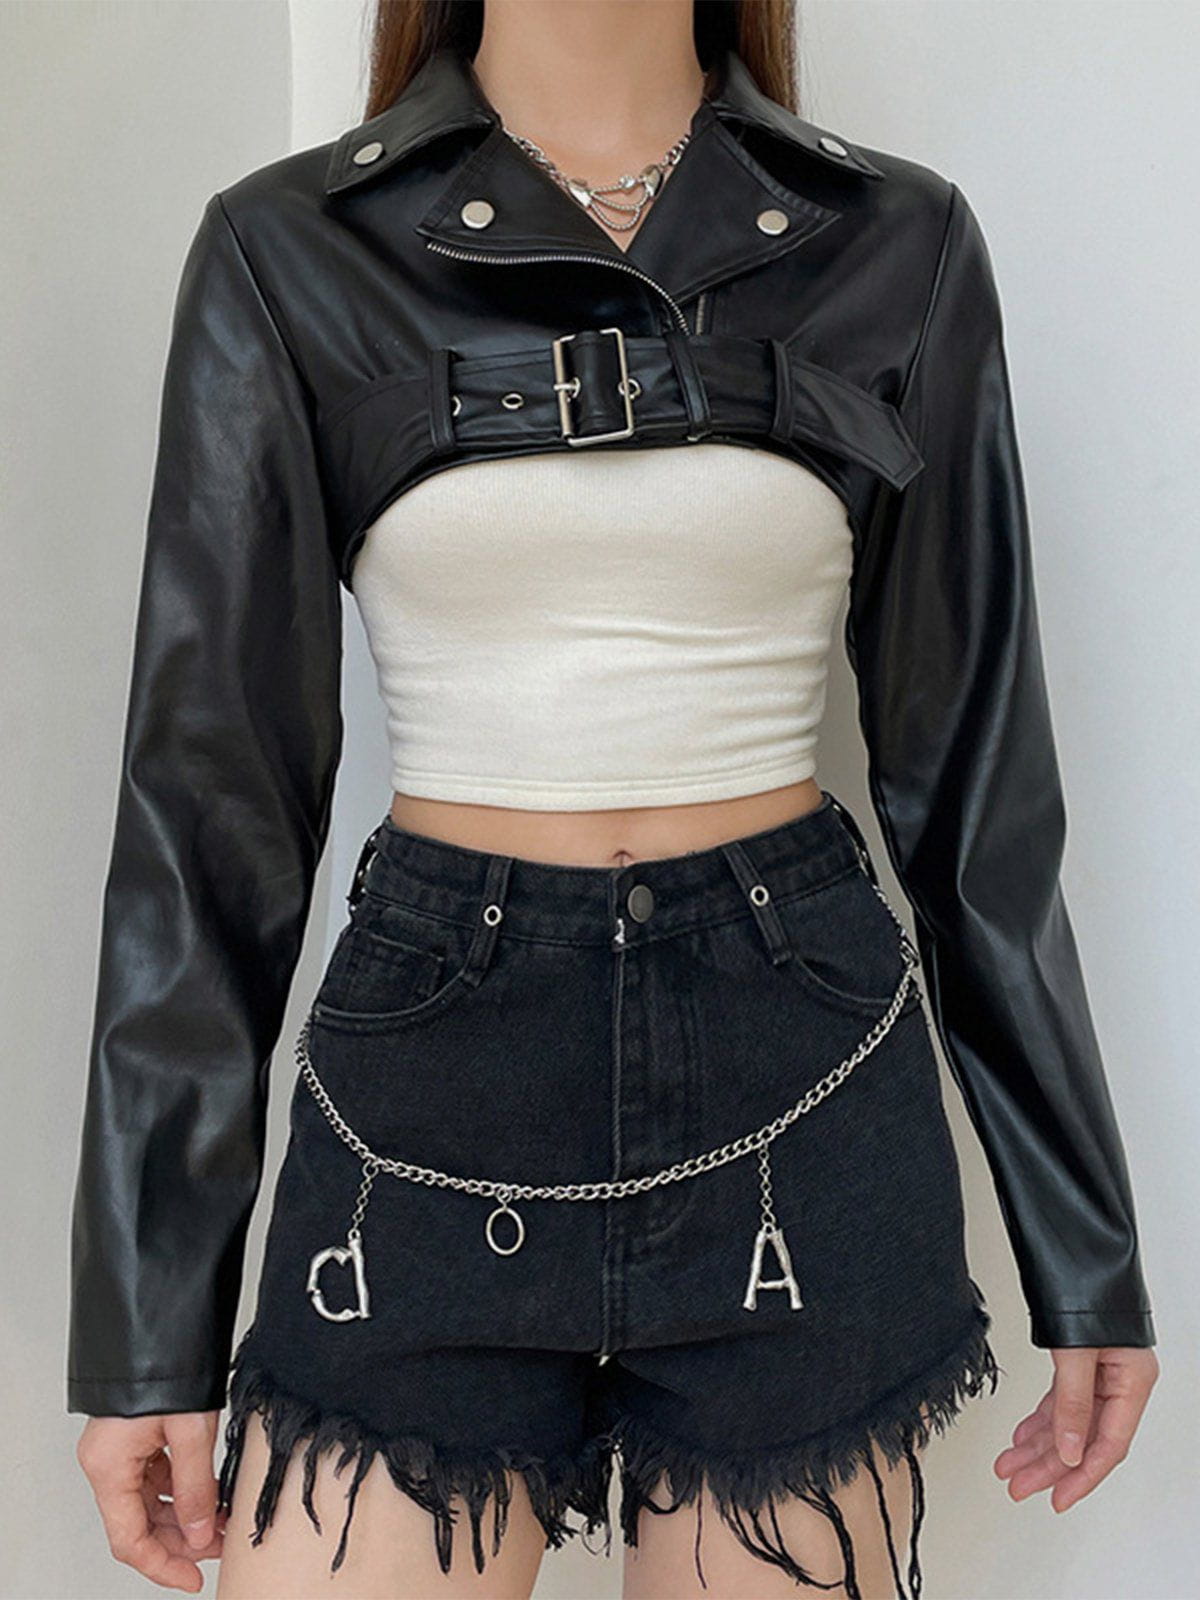 Majesda® - Metal Buckle Zipper Leather Racing Jacket outfit ideas, streetwear fashion - majesda.com